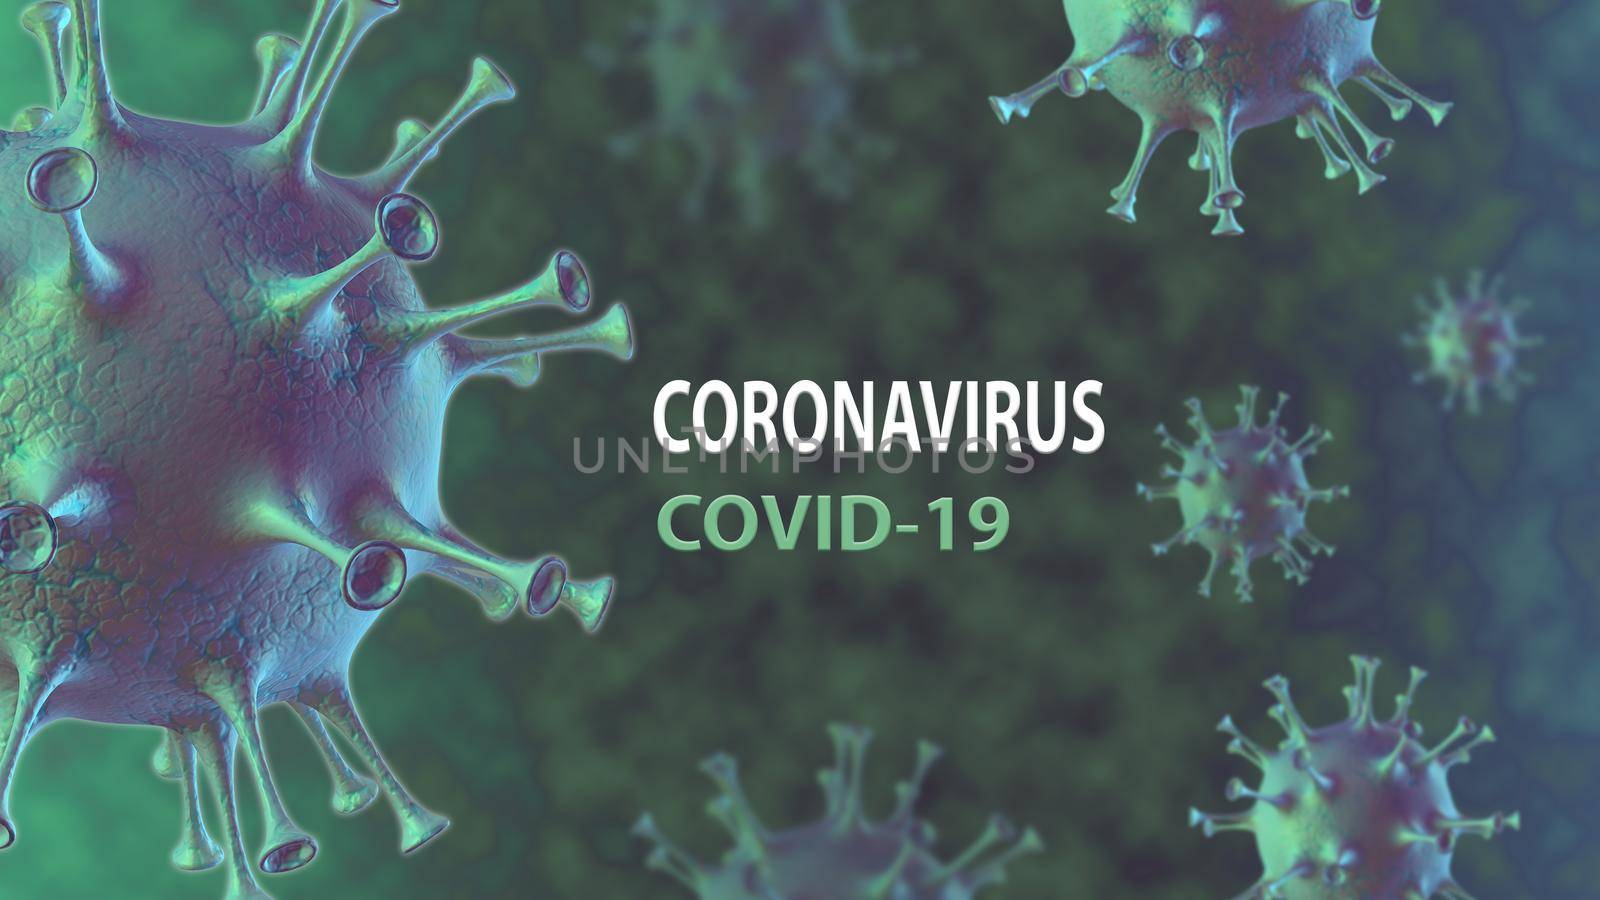 Coronavirus Cells by MilanMarkovic78